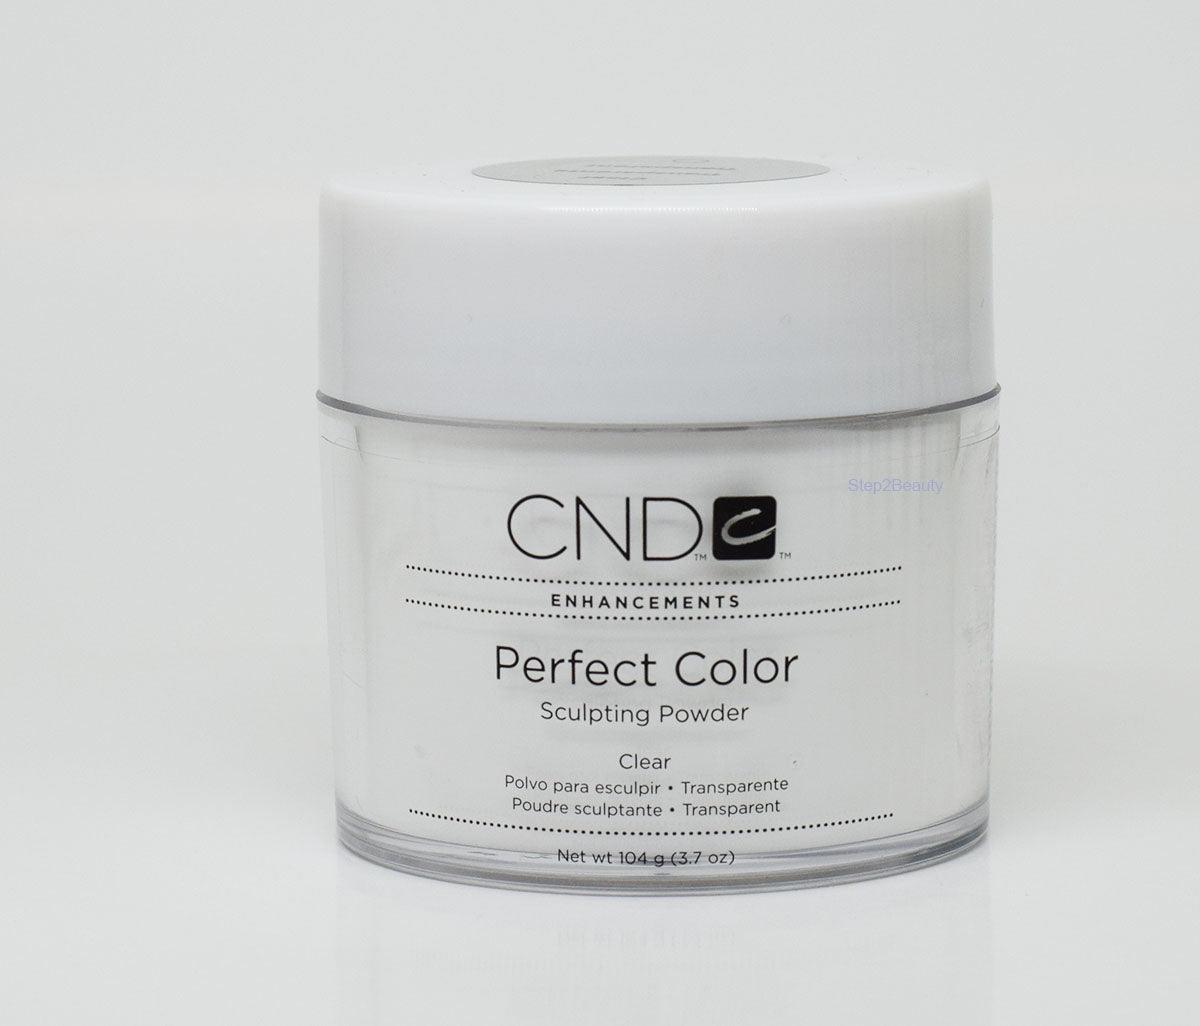 CND Enhancement Sculpting Powder - Perfect Color - CLEAR 3.7 oz